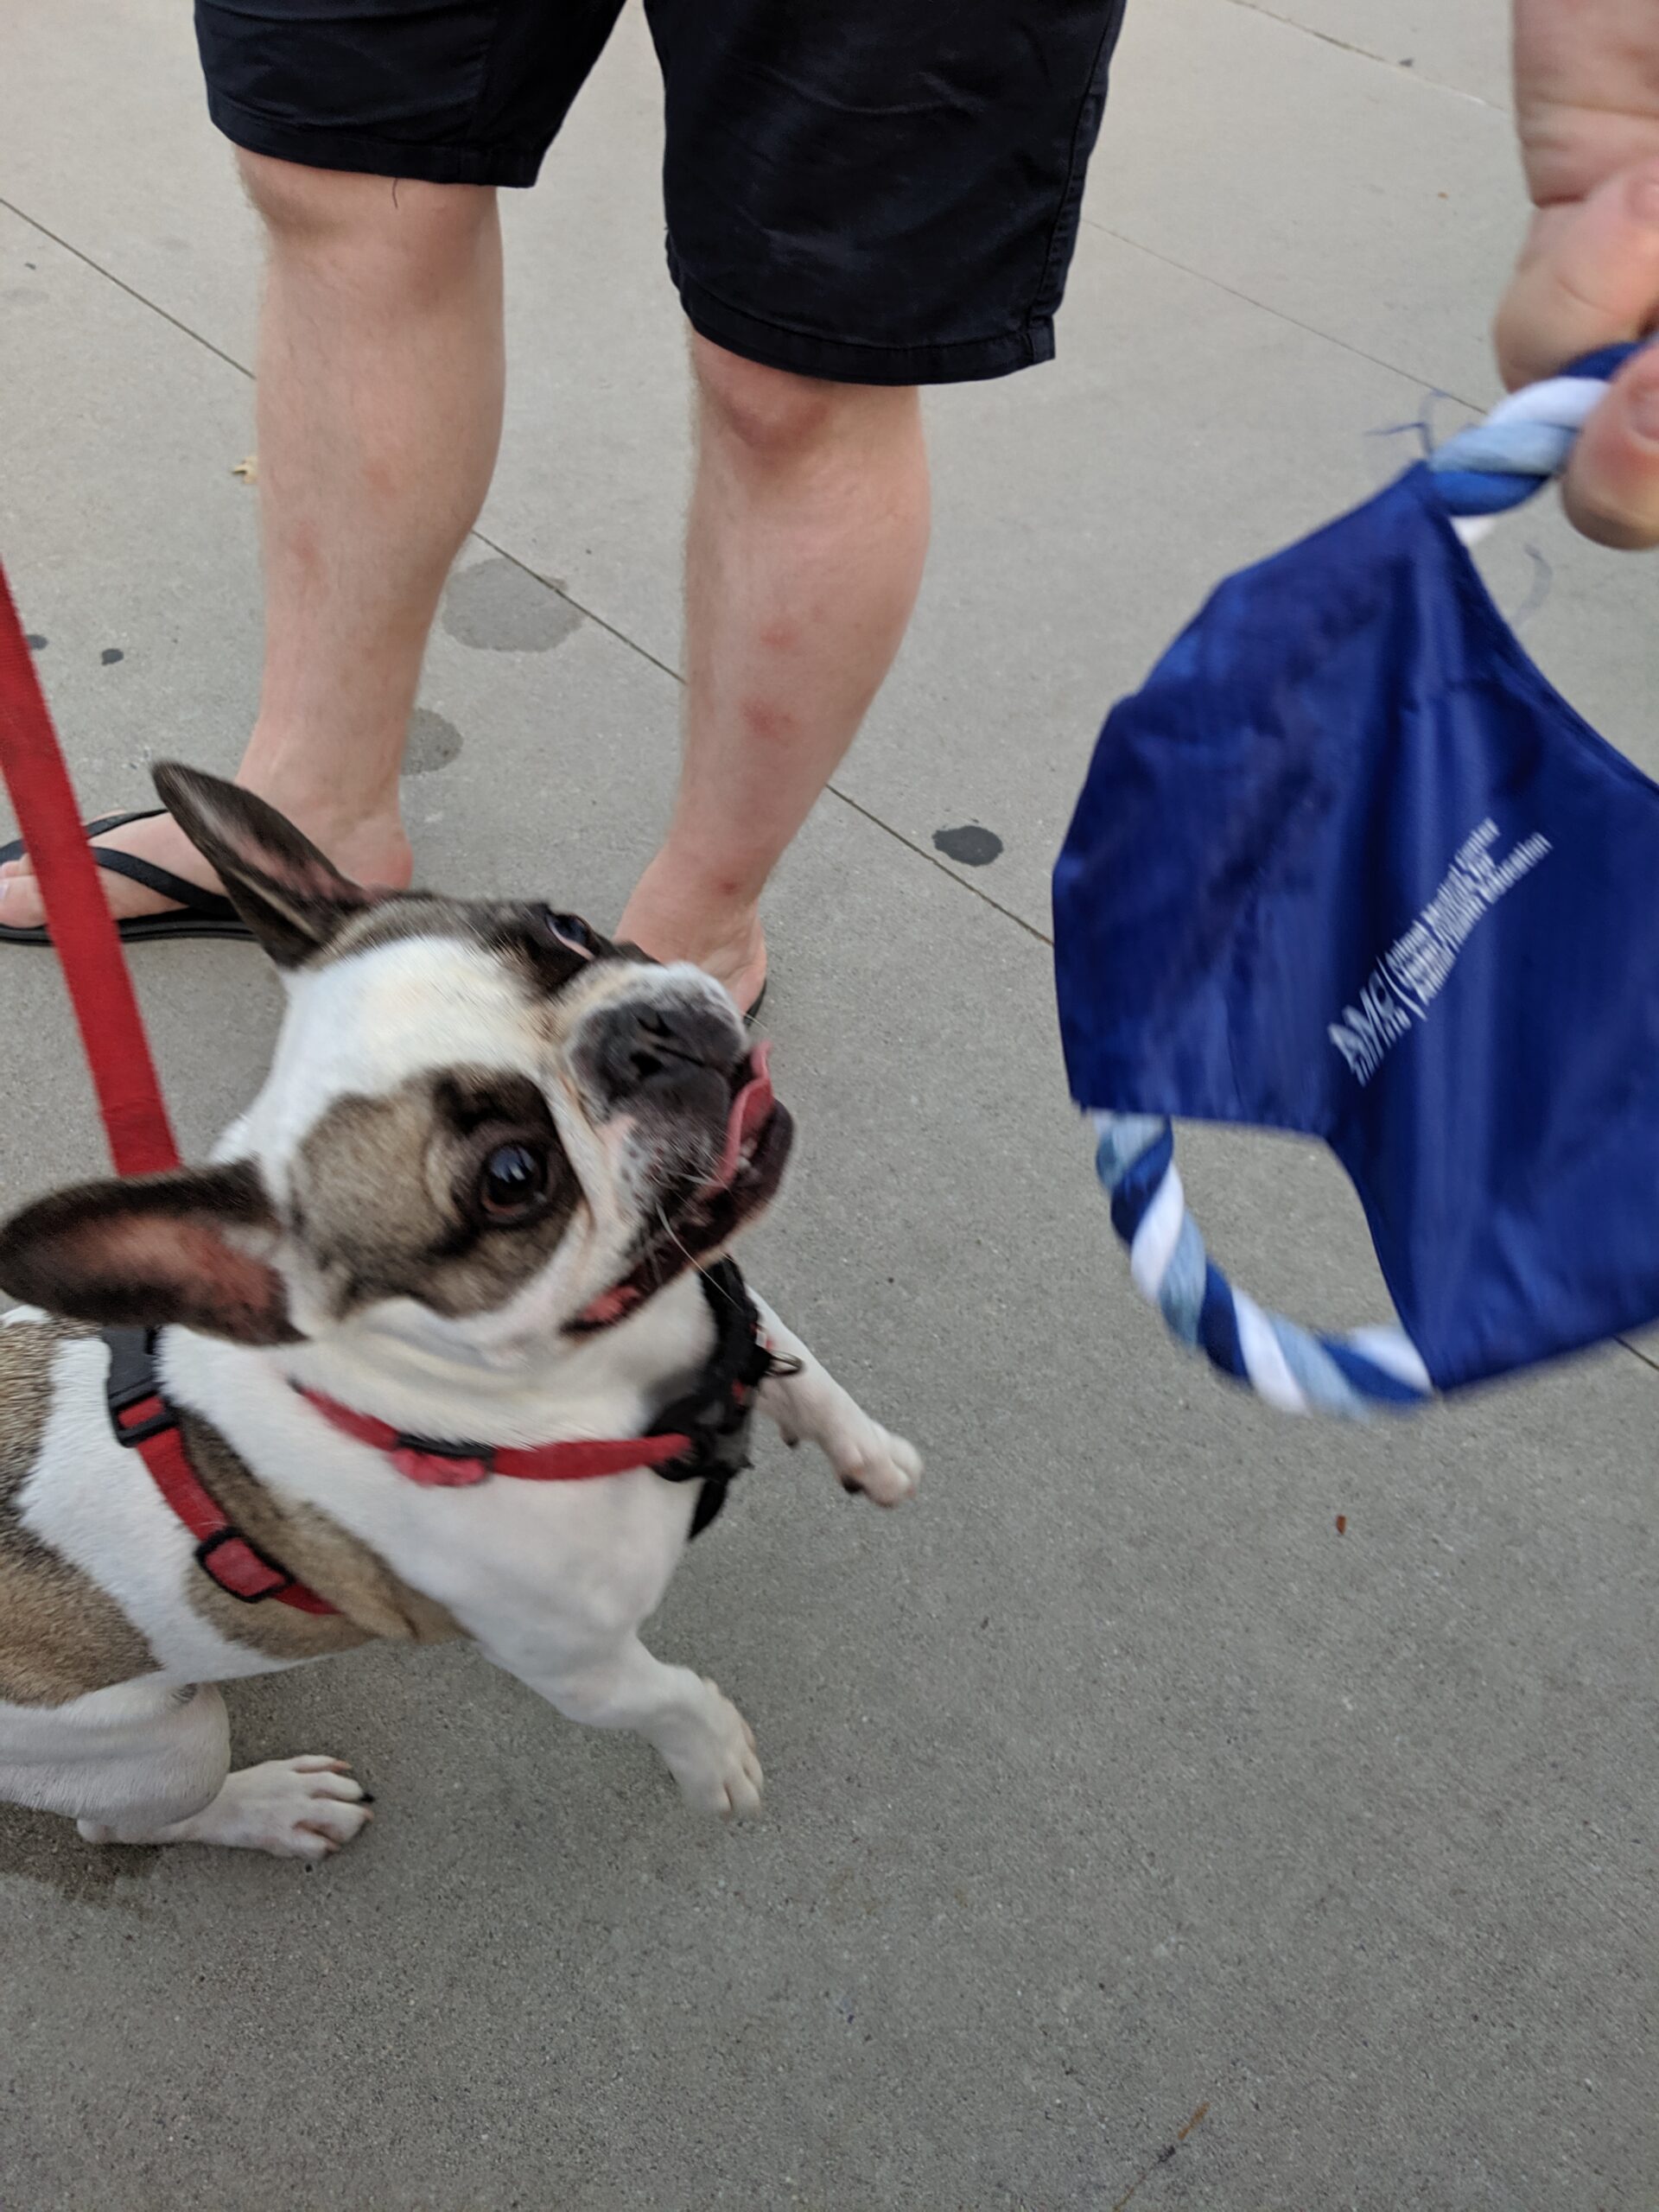 Pet owner shows dog frisbee at CinemaLIC